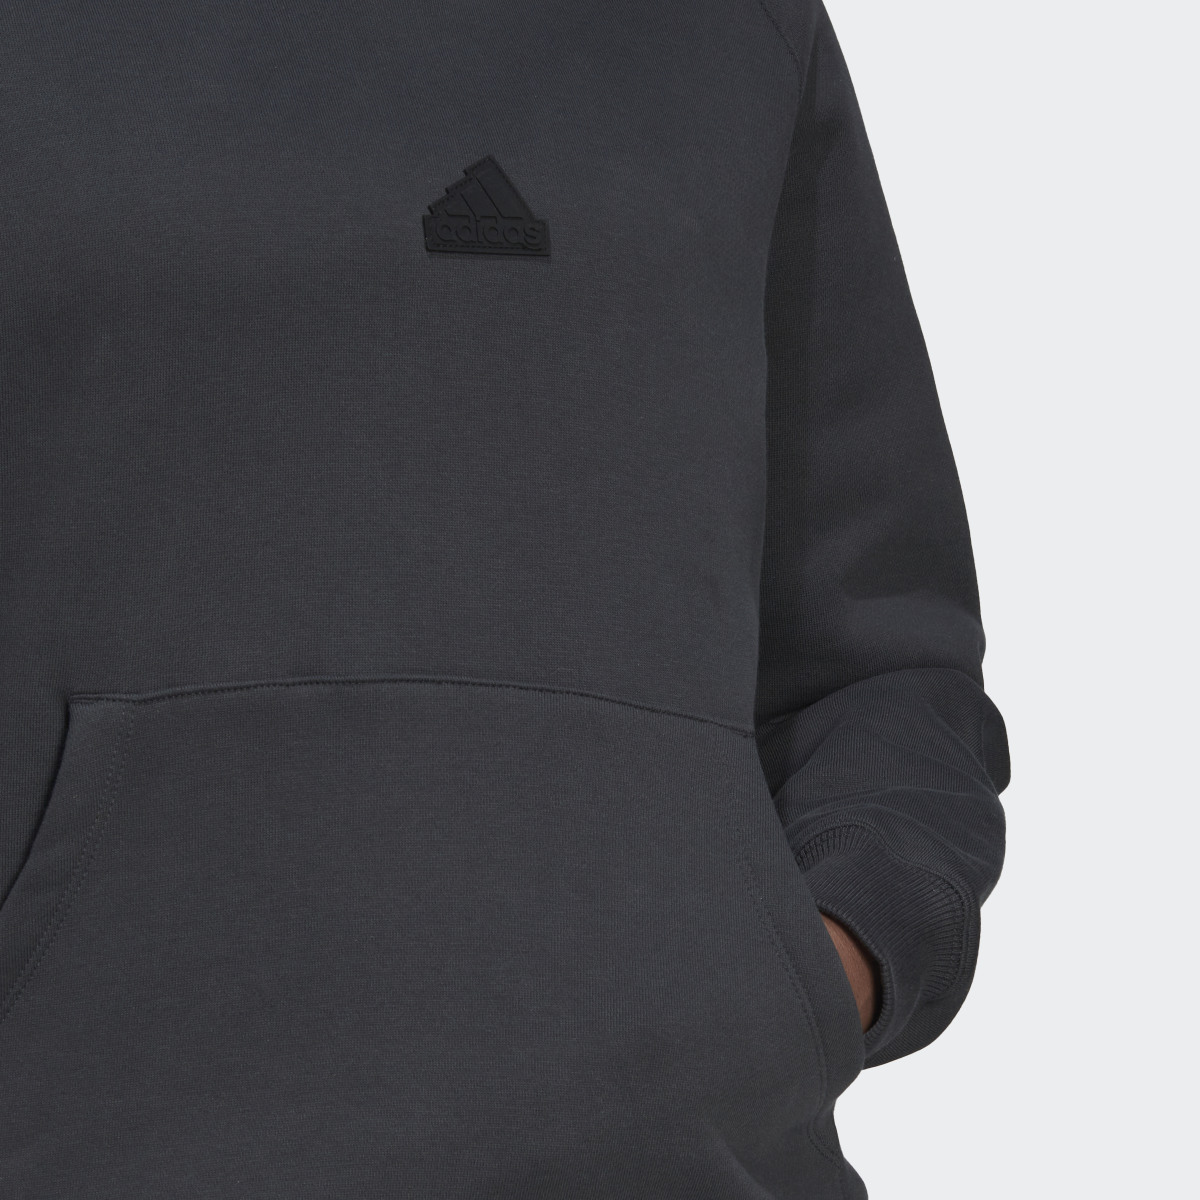 Adidas Sweatshirt Oversize com Capuz. 9